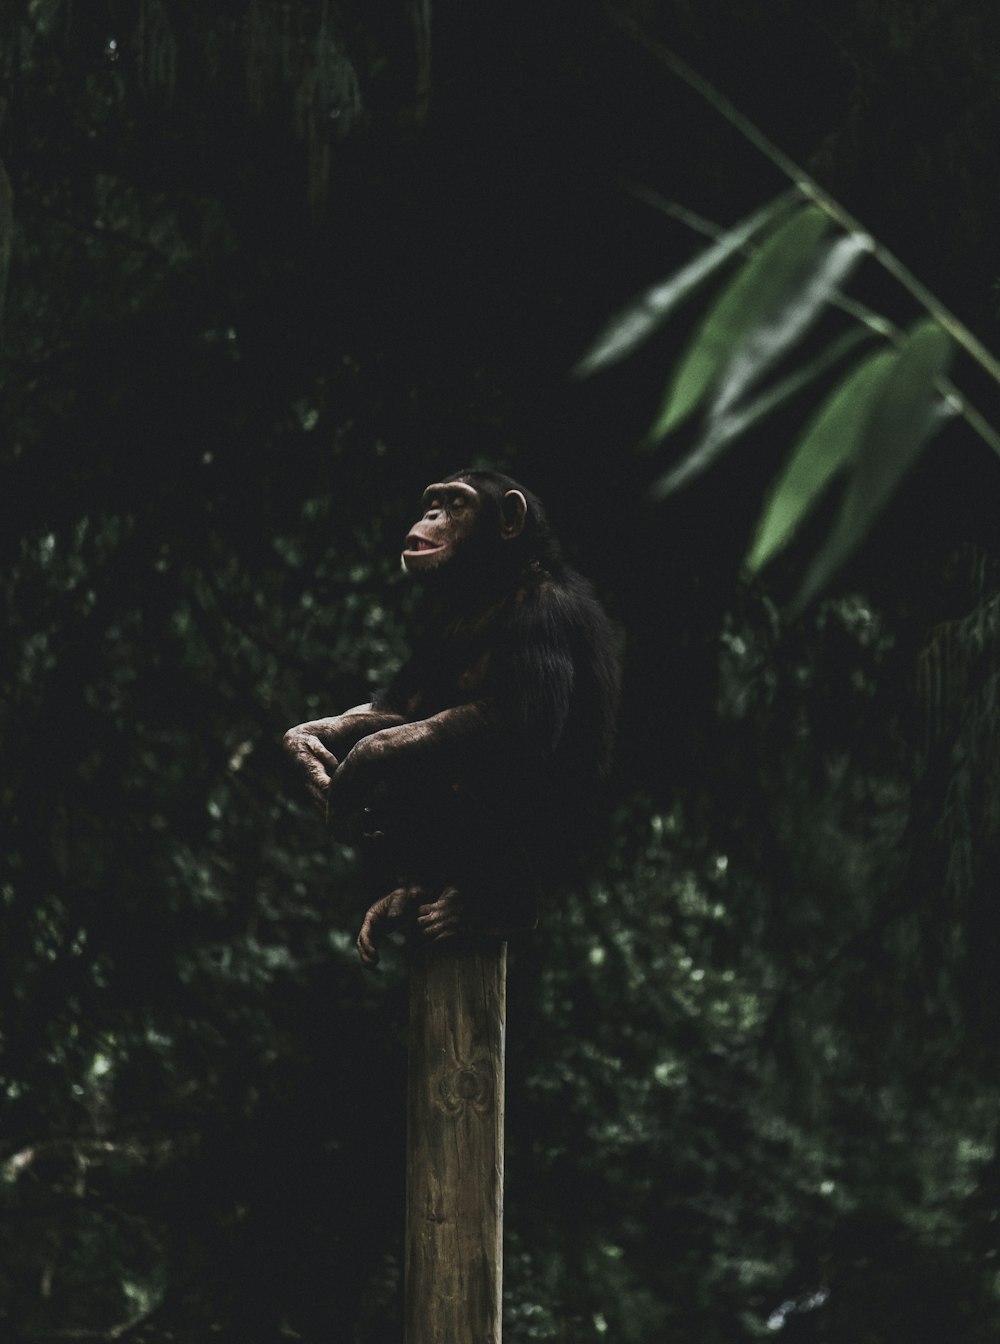 a monkey sitting on a tree